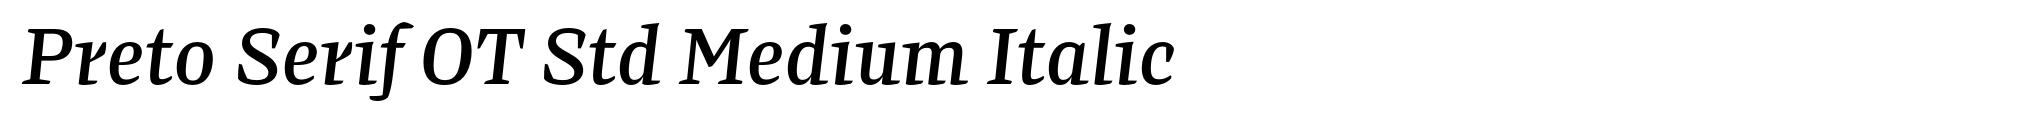 Preto Serif OT Std Medium Italic image